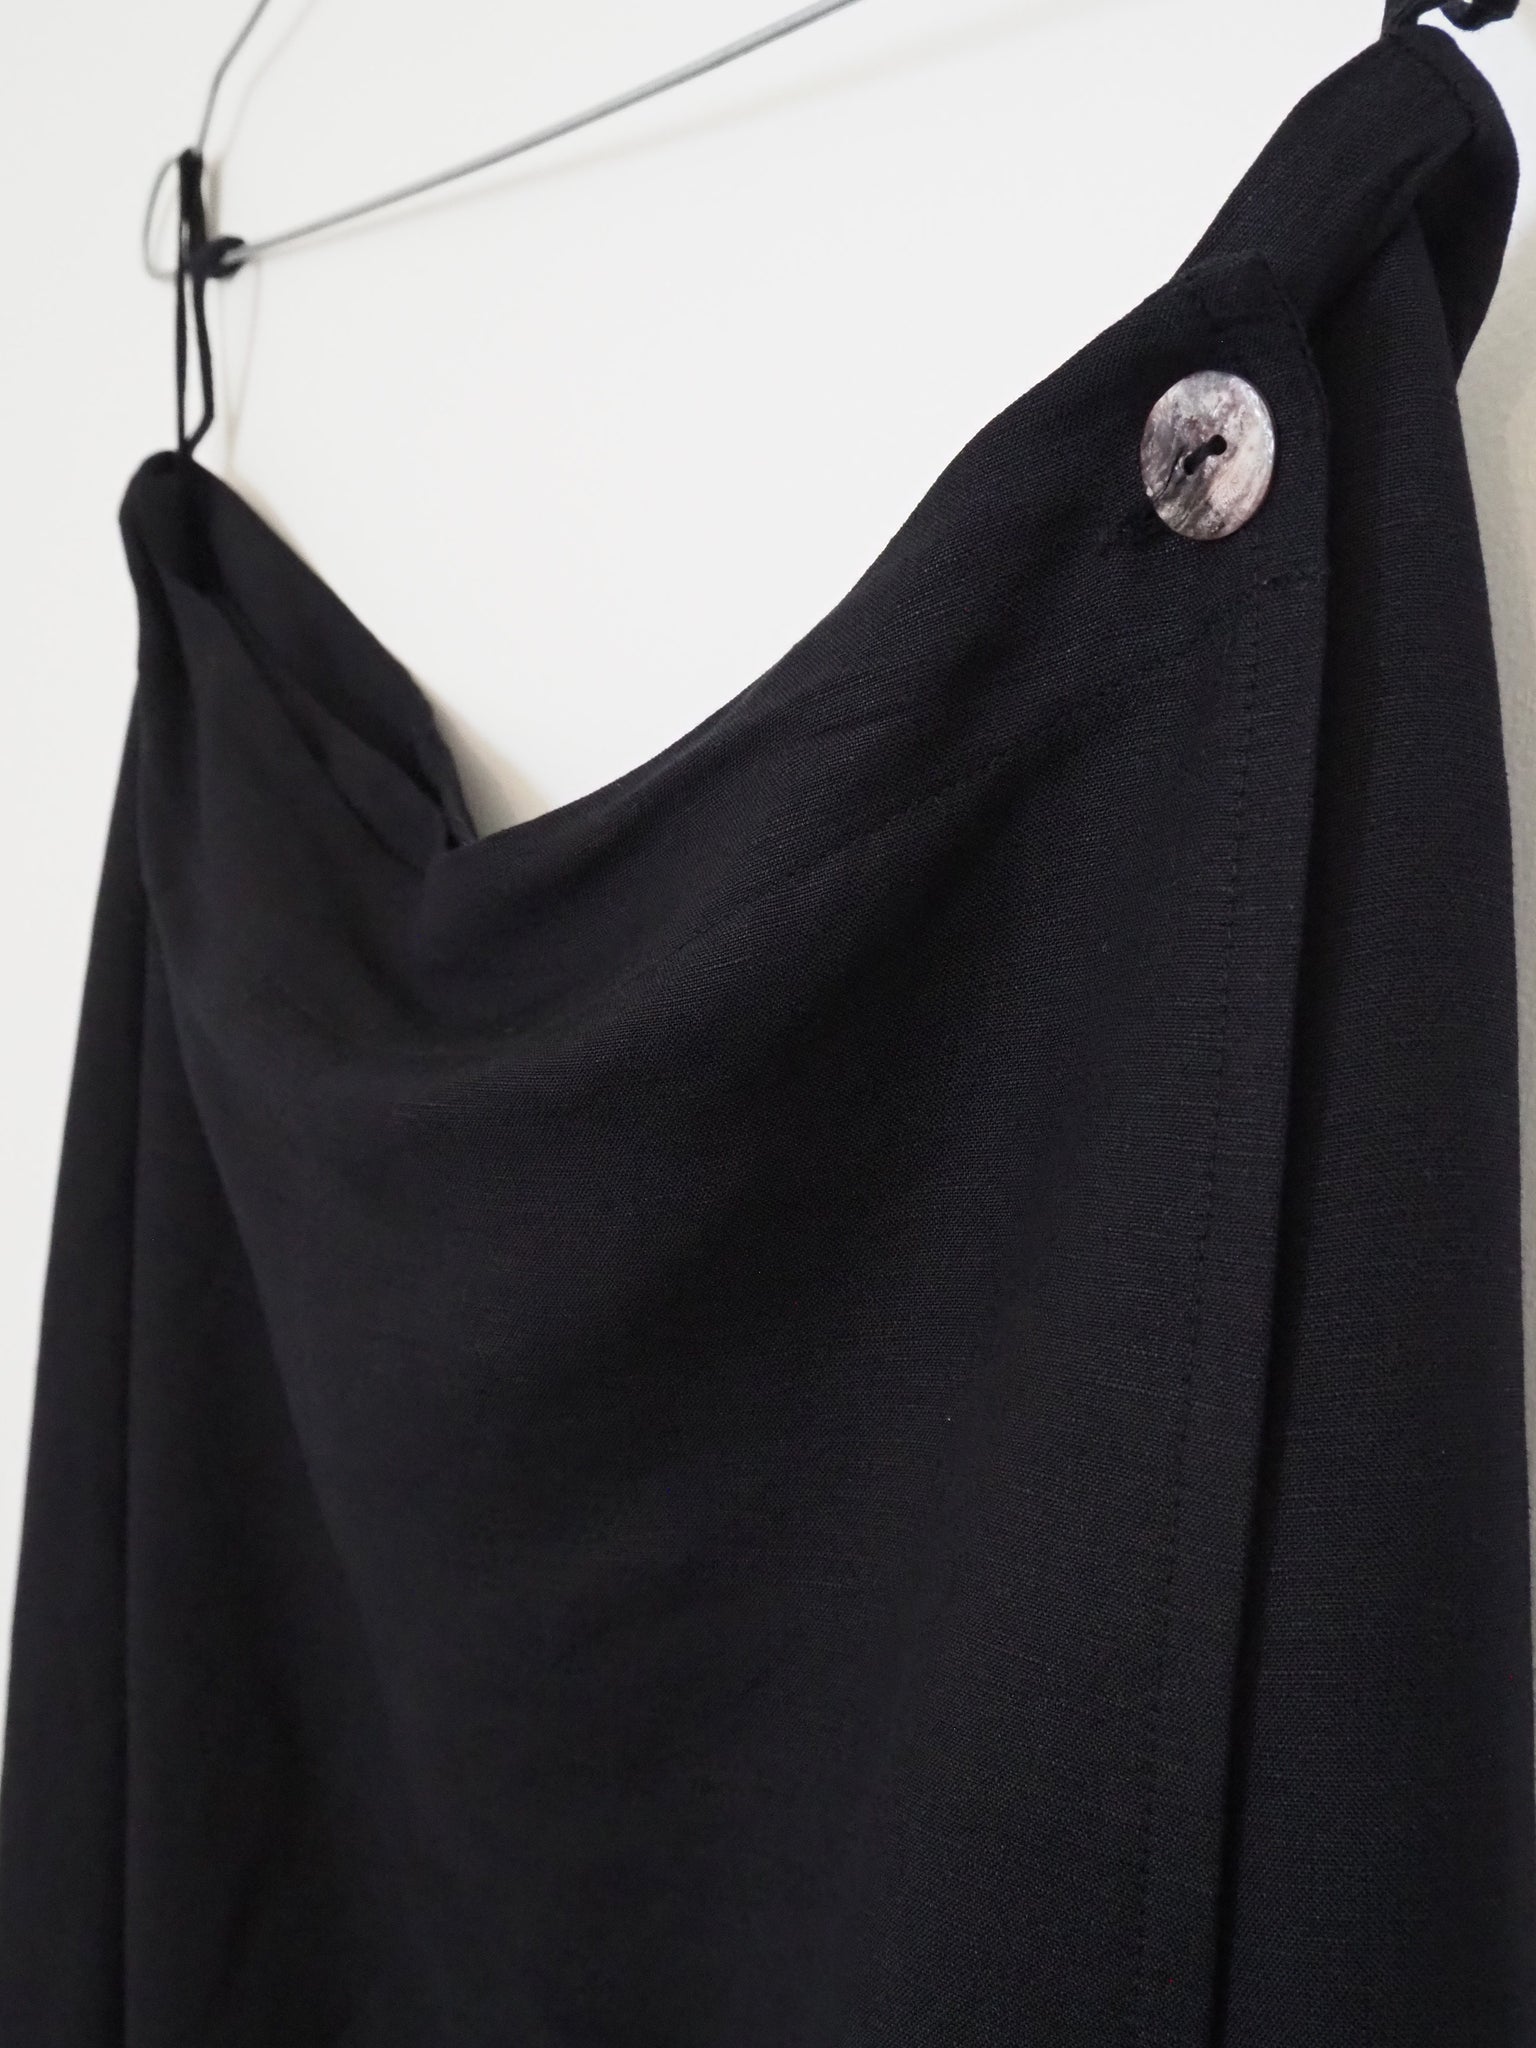 Odessa skirt - Washer black